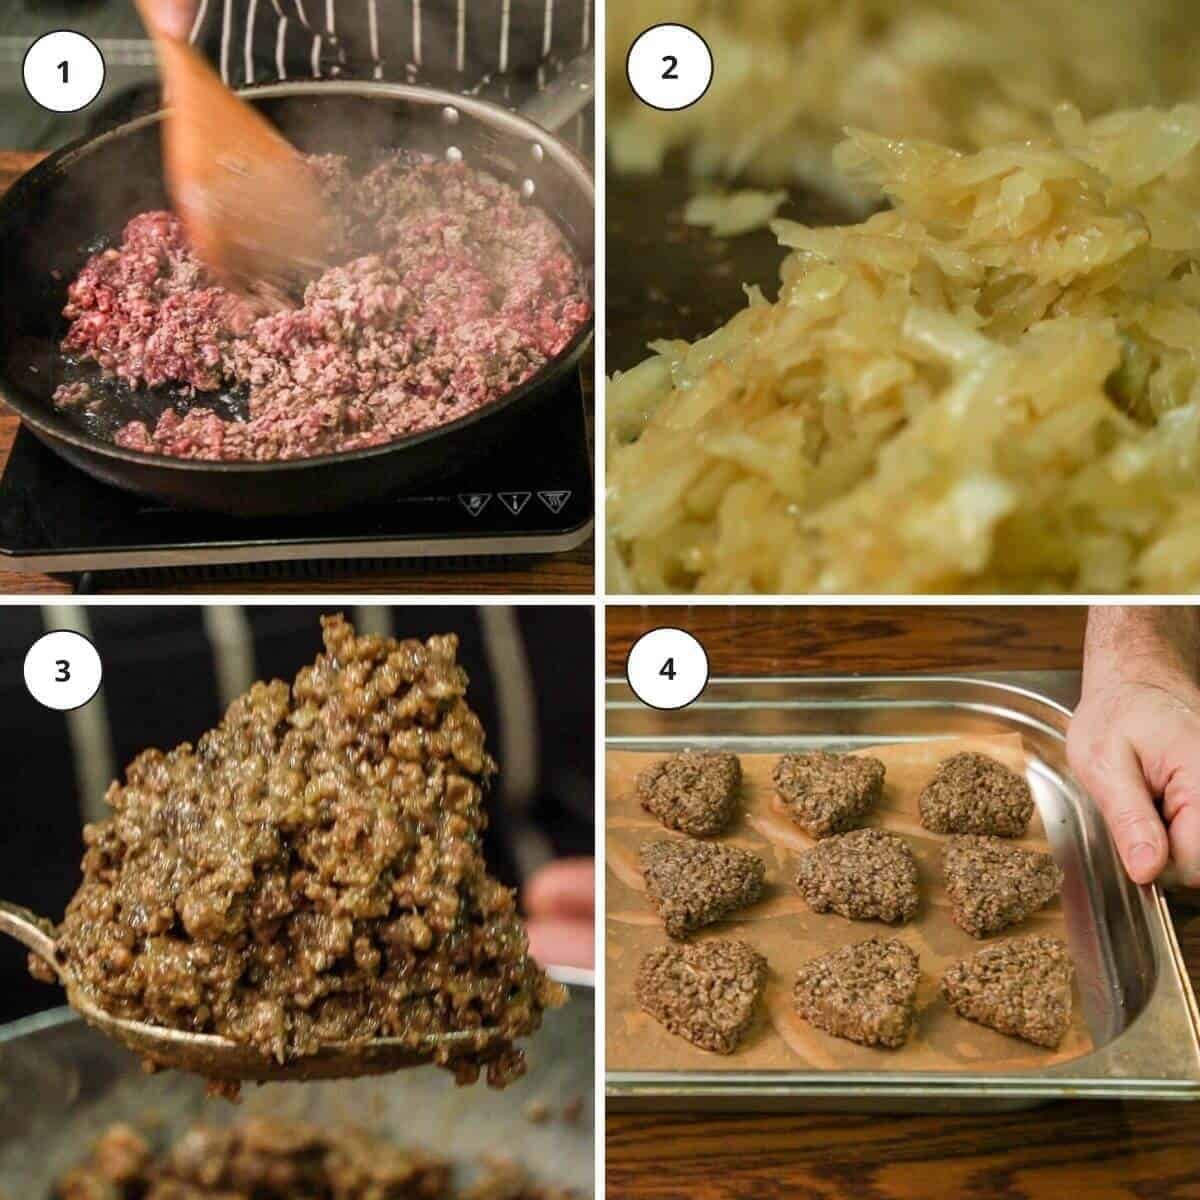 Picture steps to make meat piroshki filling.